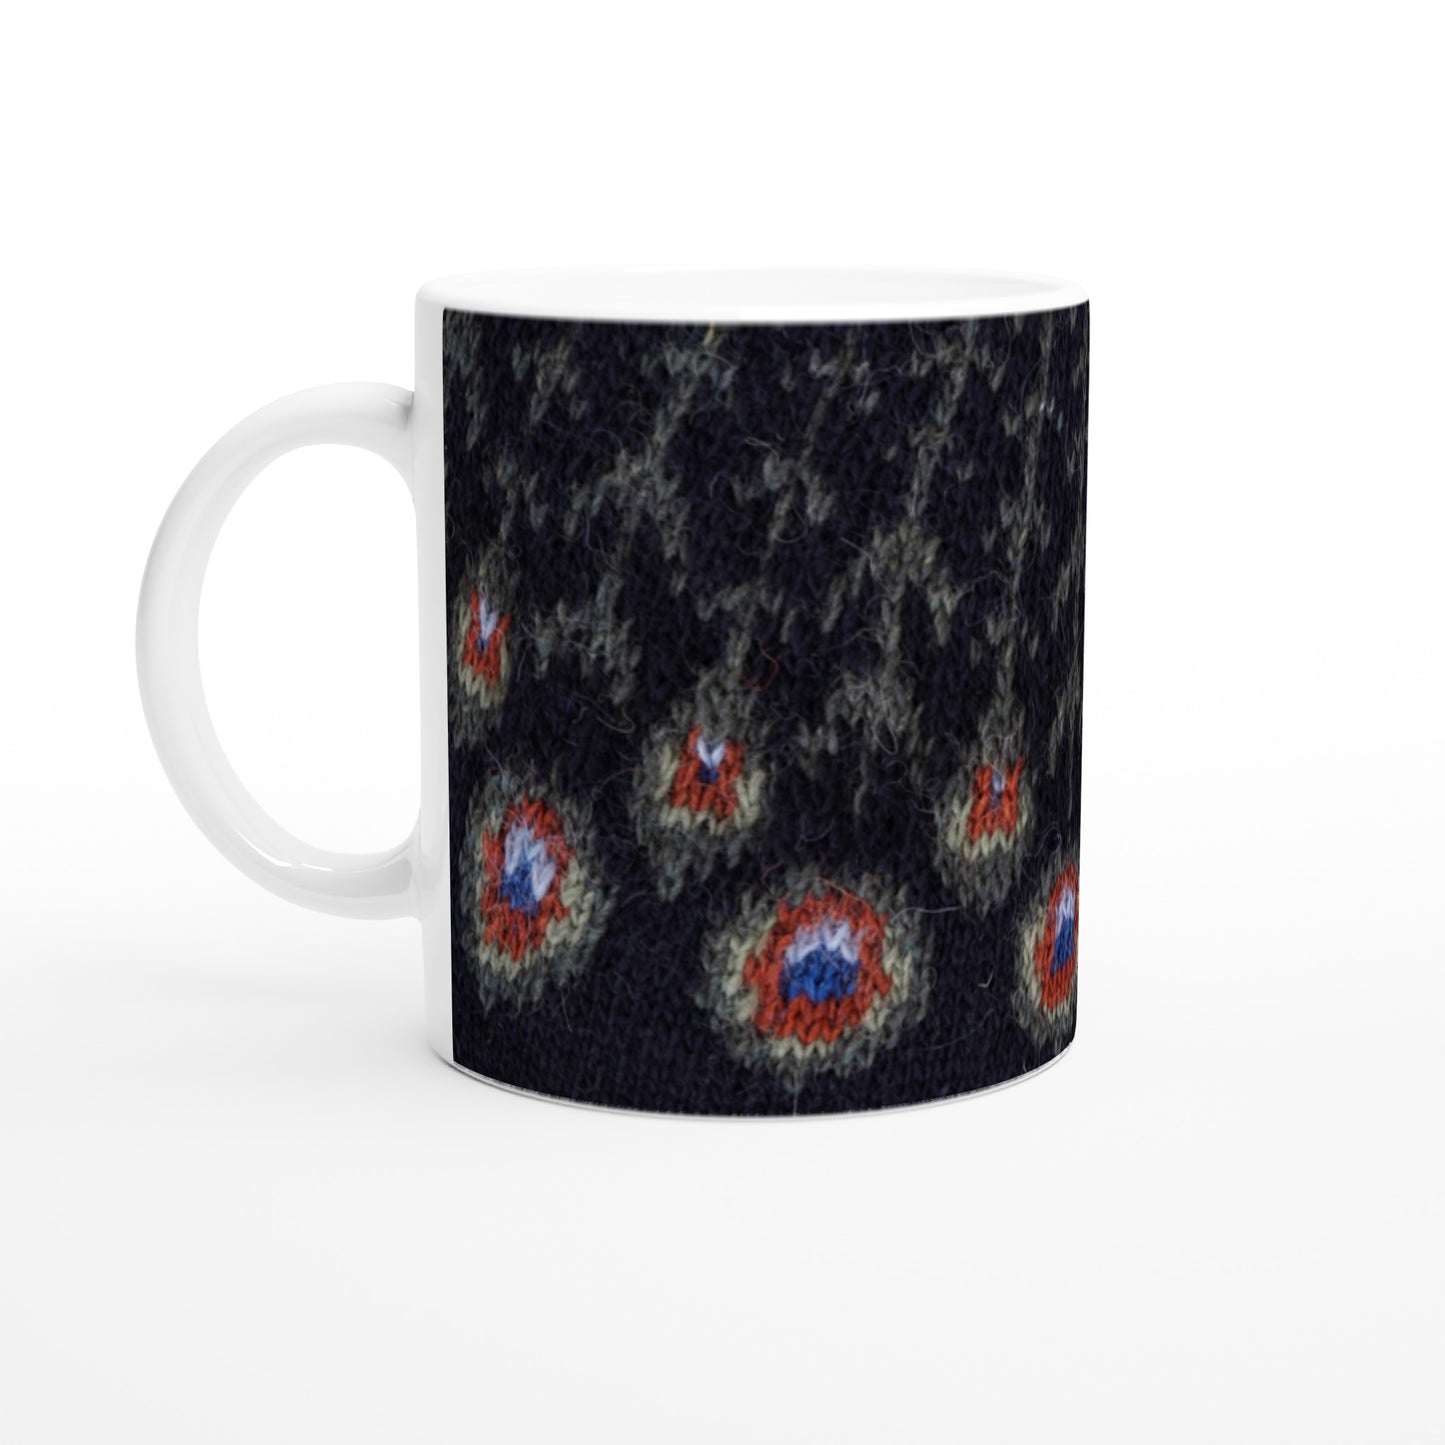 Mug with Icelandic knit pattern - Peacock